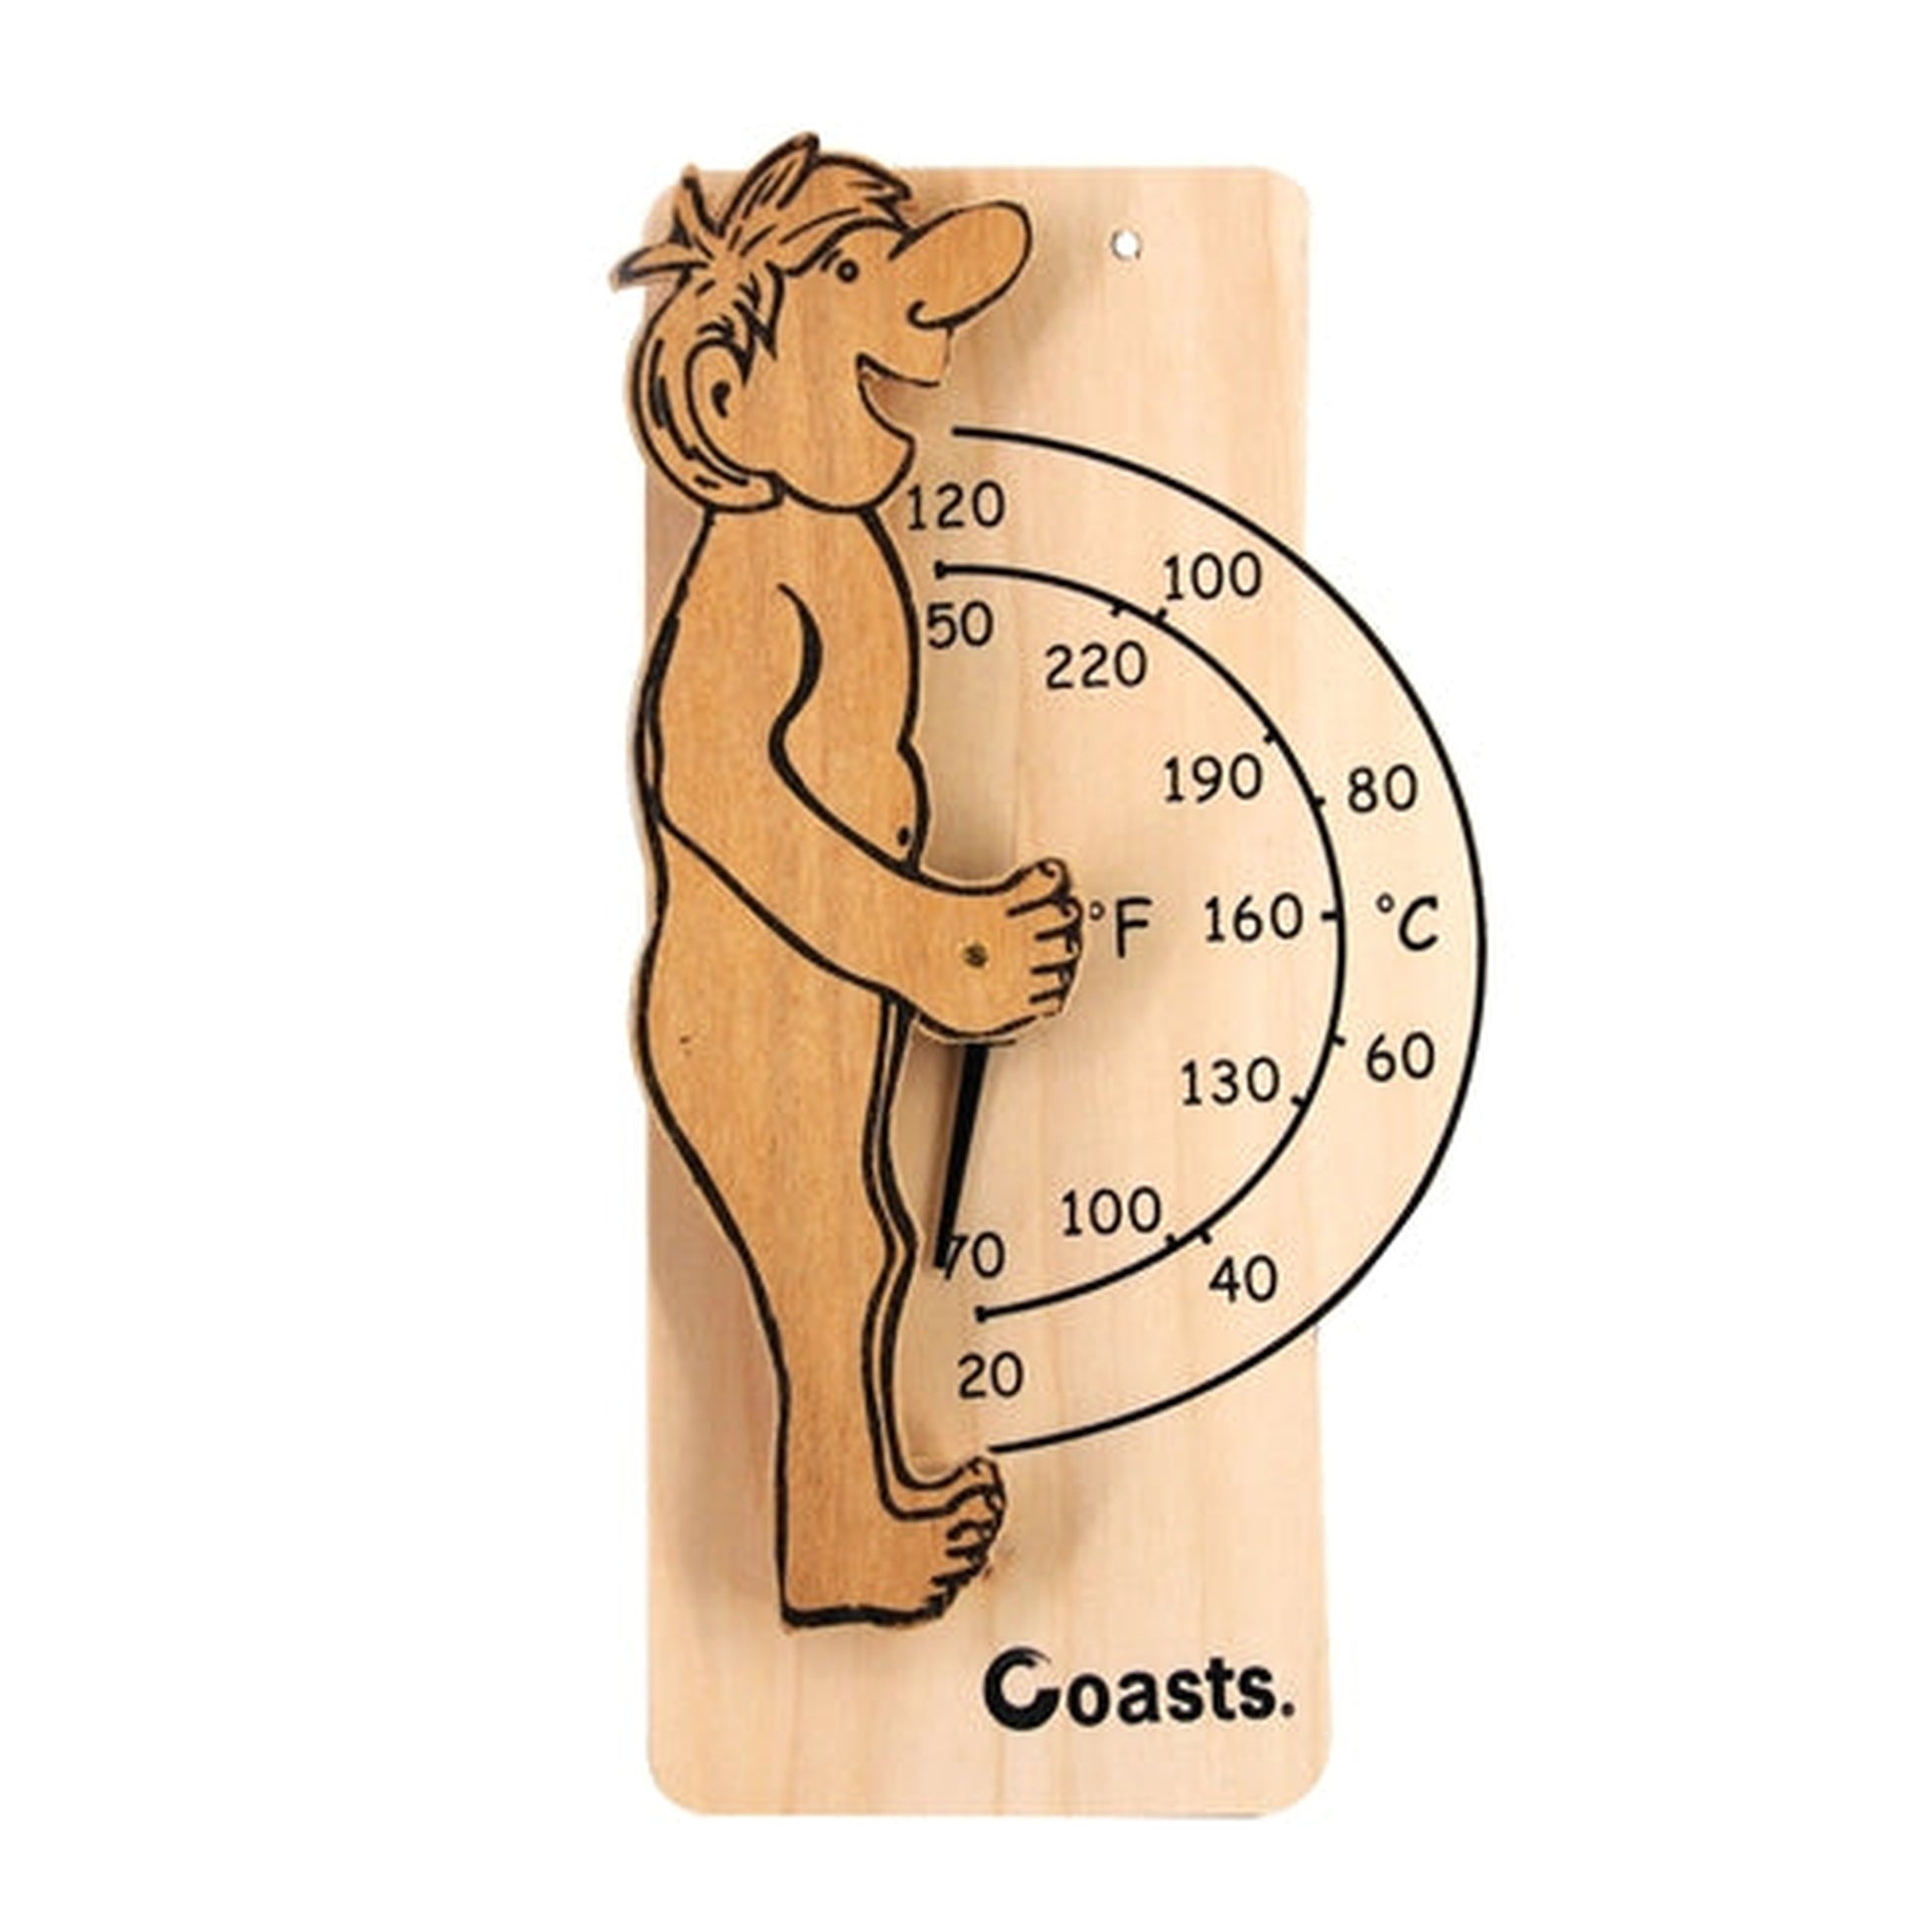 Aleko Coasts Wall-Mounted Sauna Thermometer in Fahrenheit in Pine Wood Finish